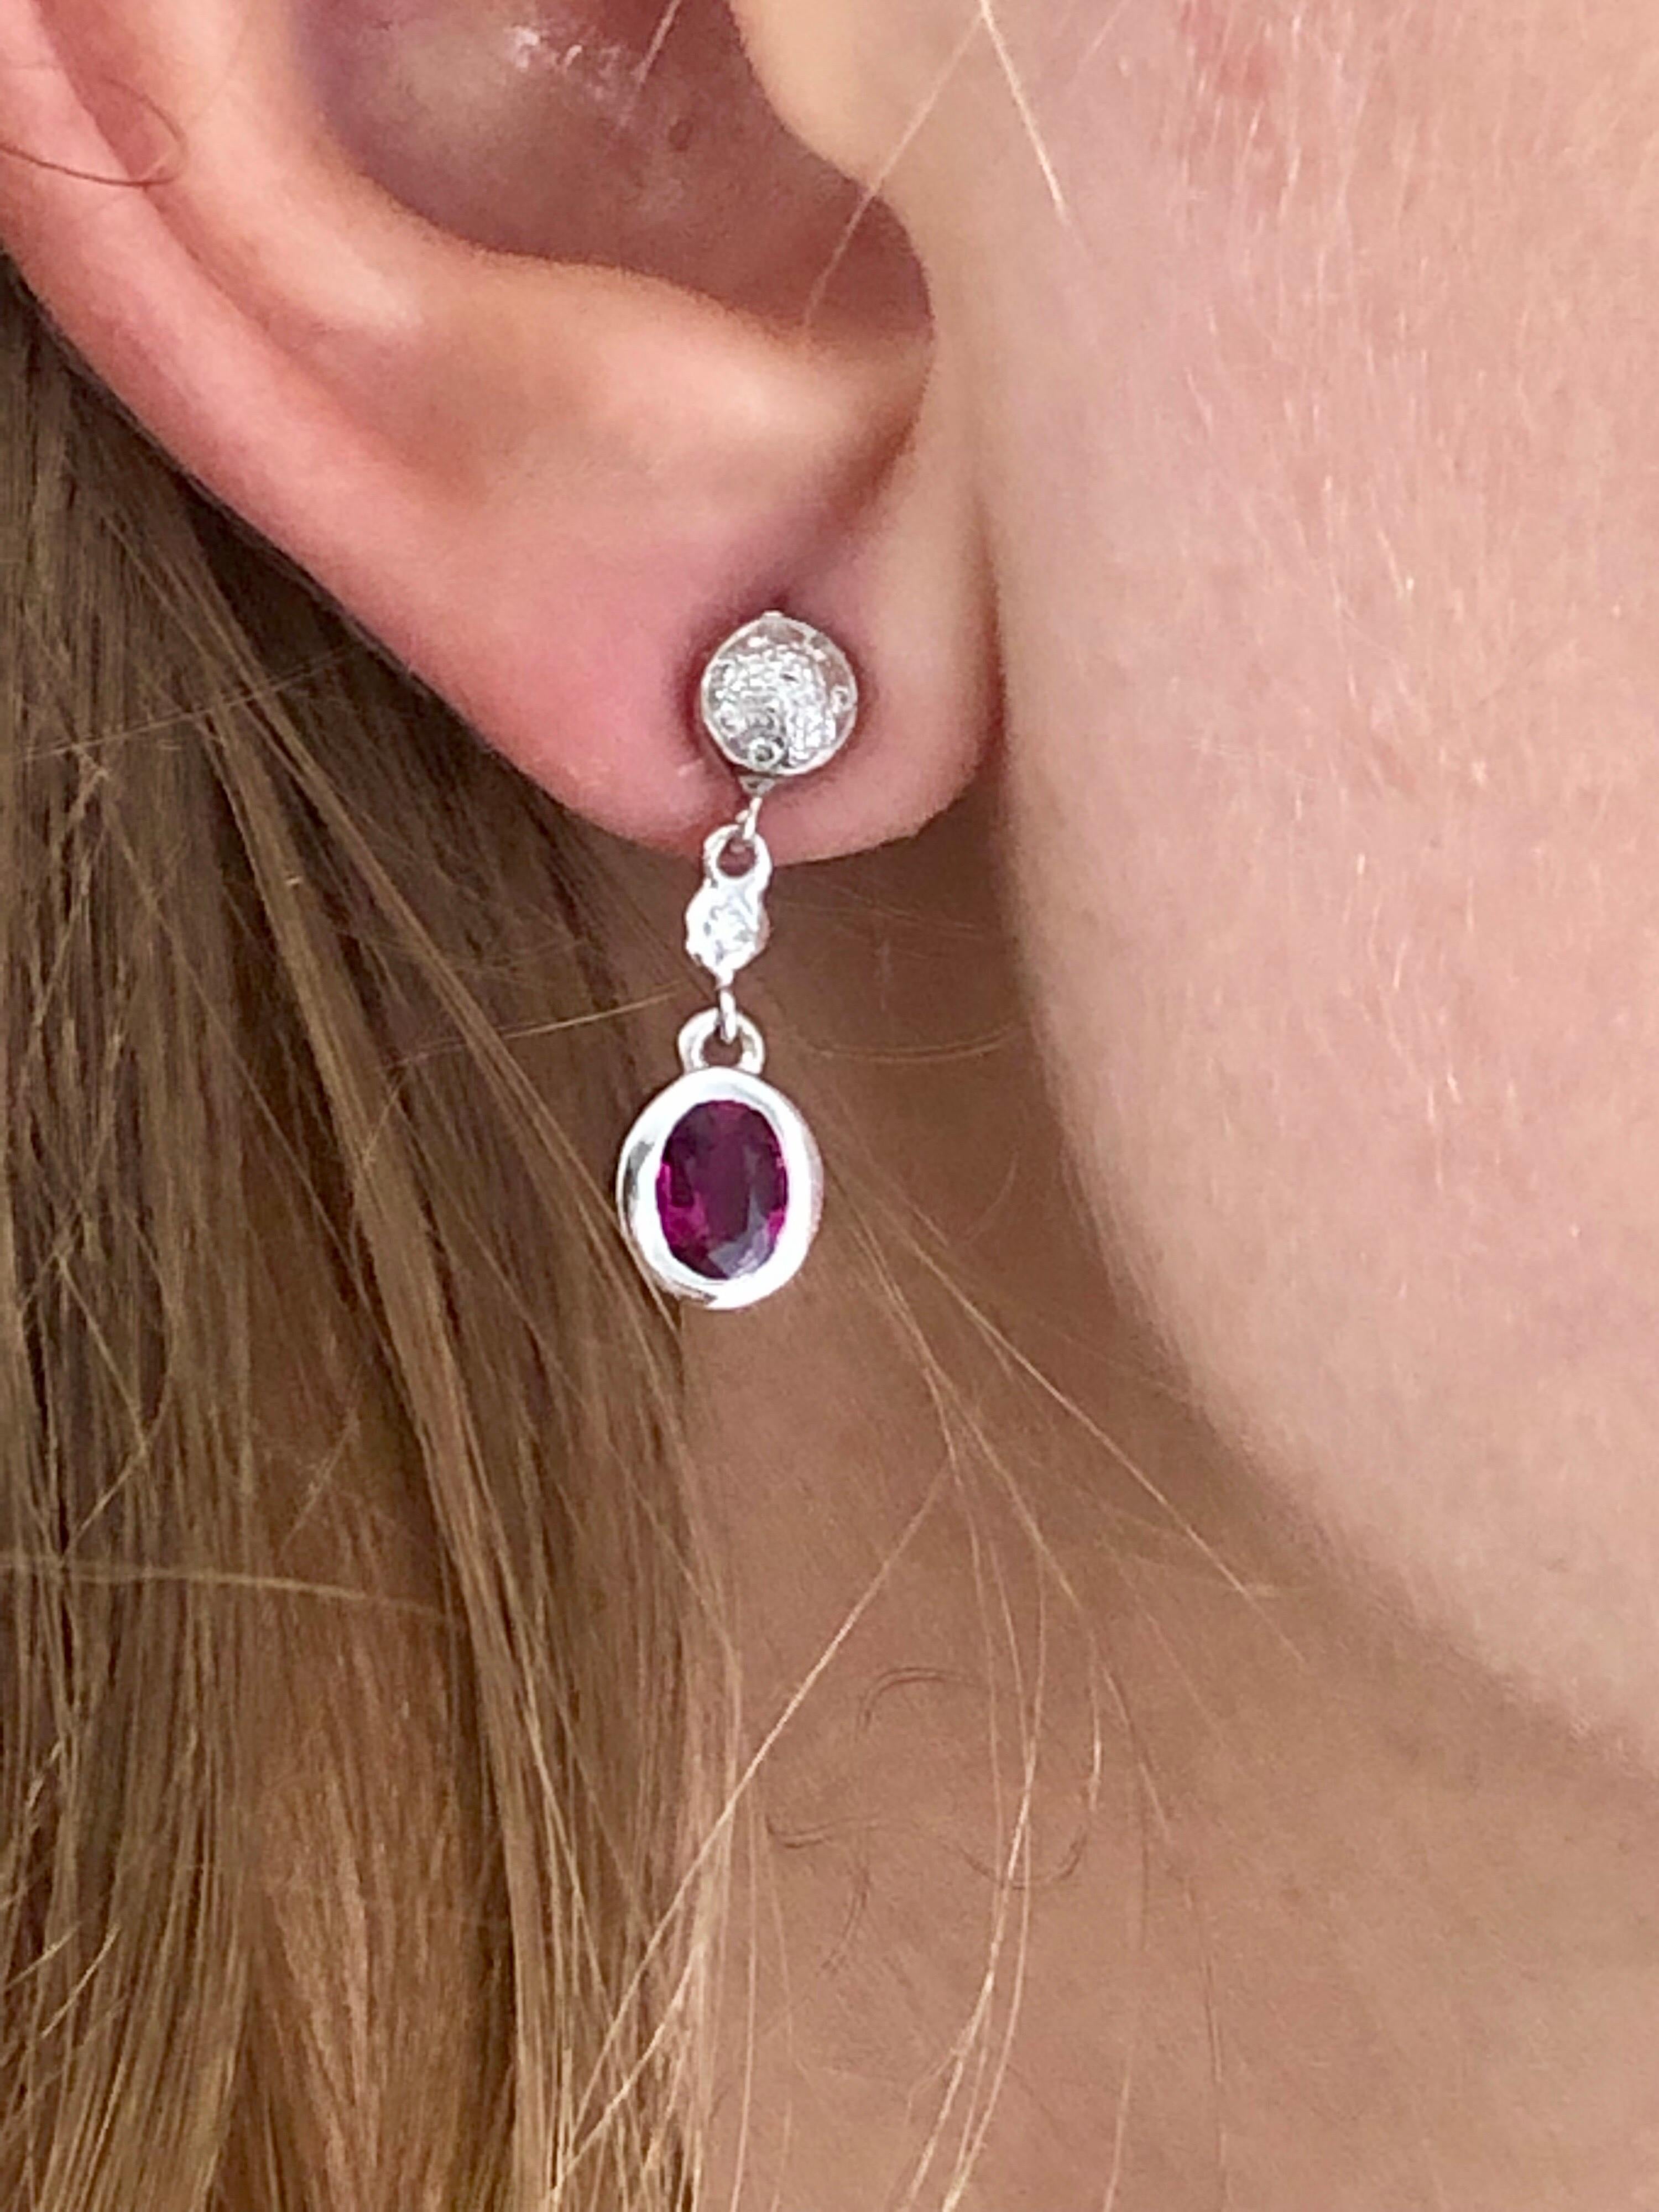 Fourteen karats white gold diamond and ruby earrings measuring 1